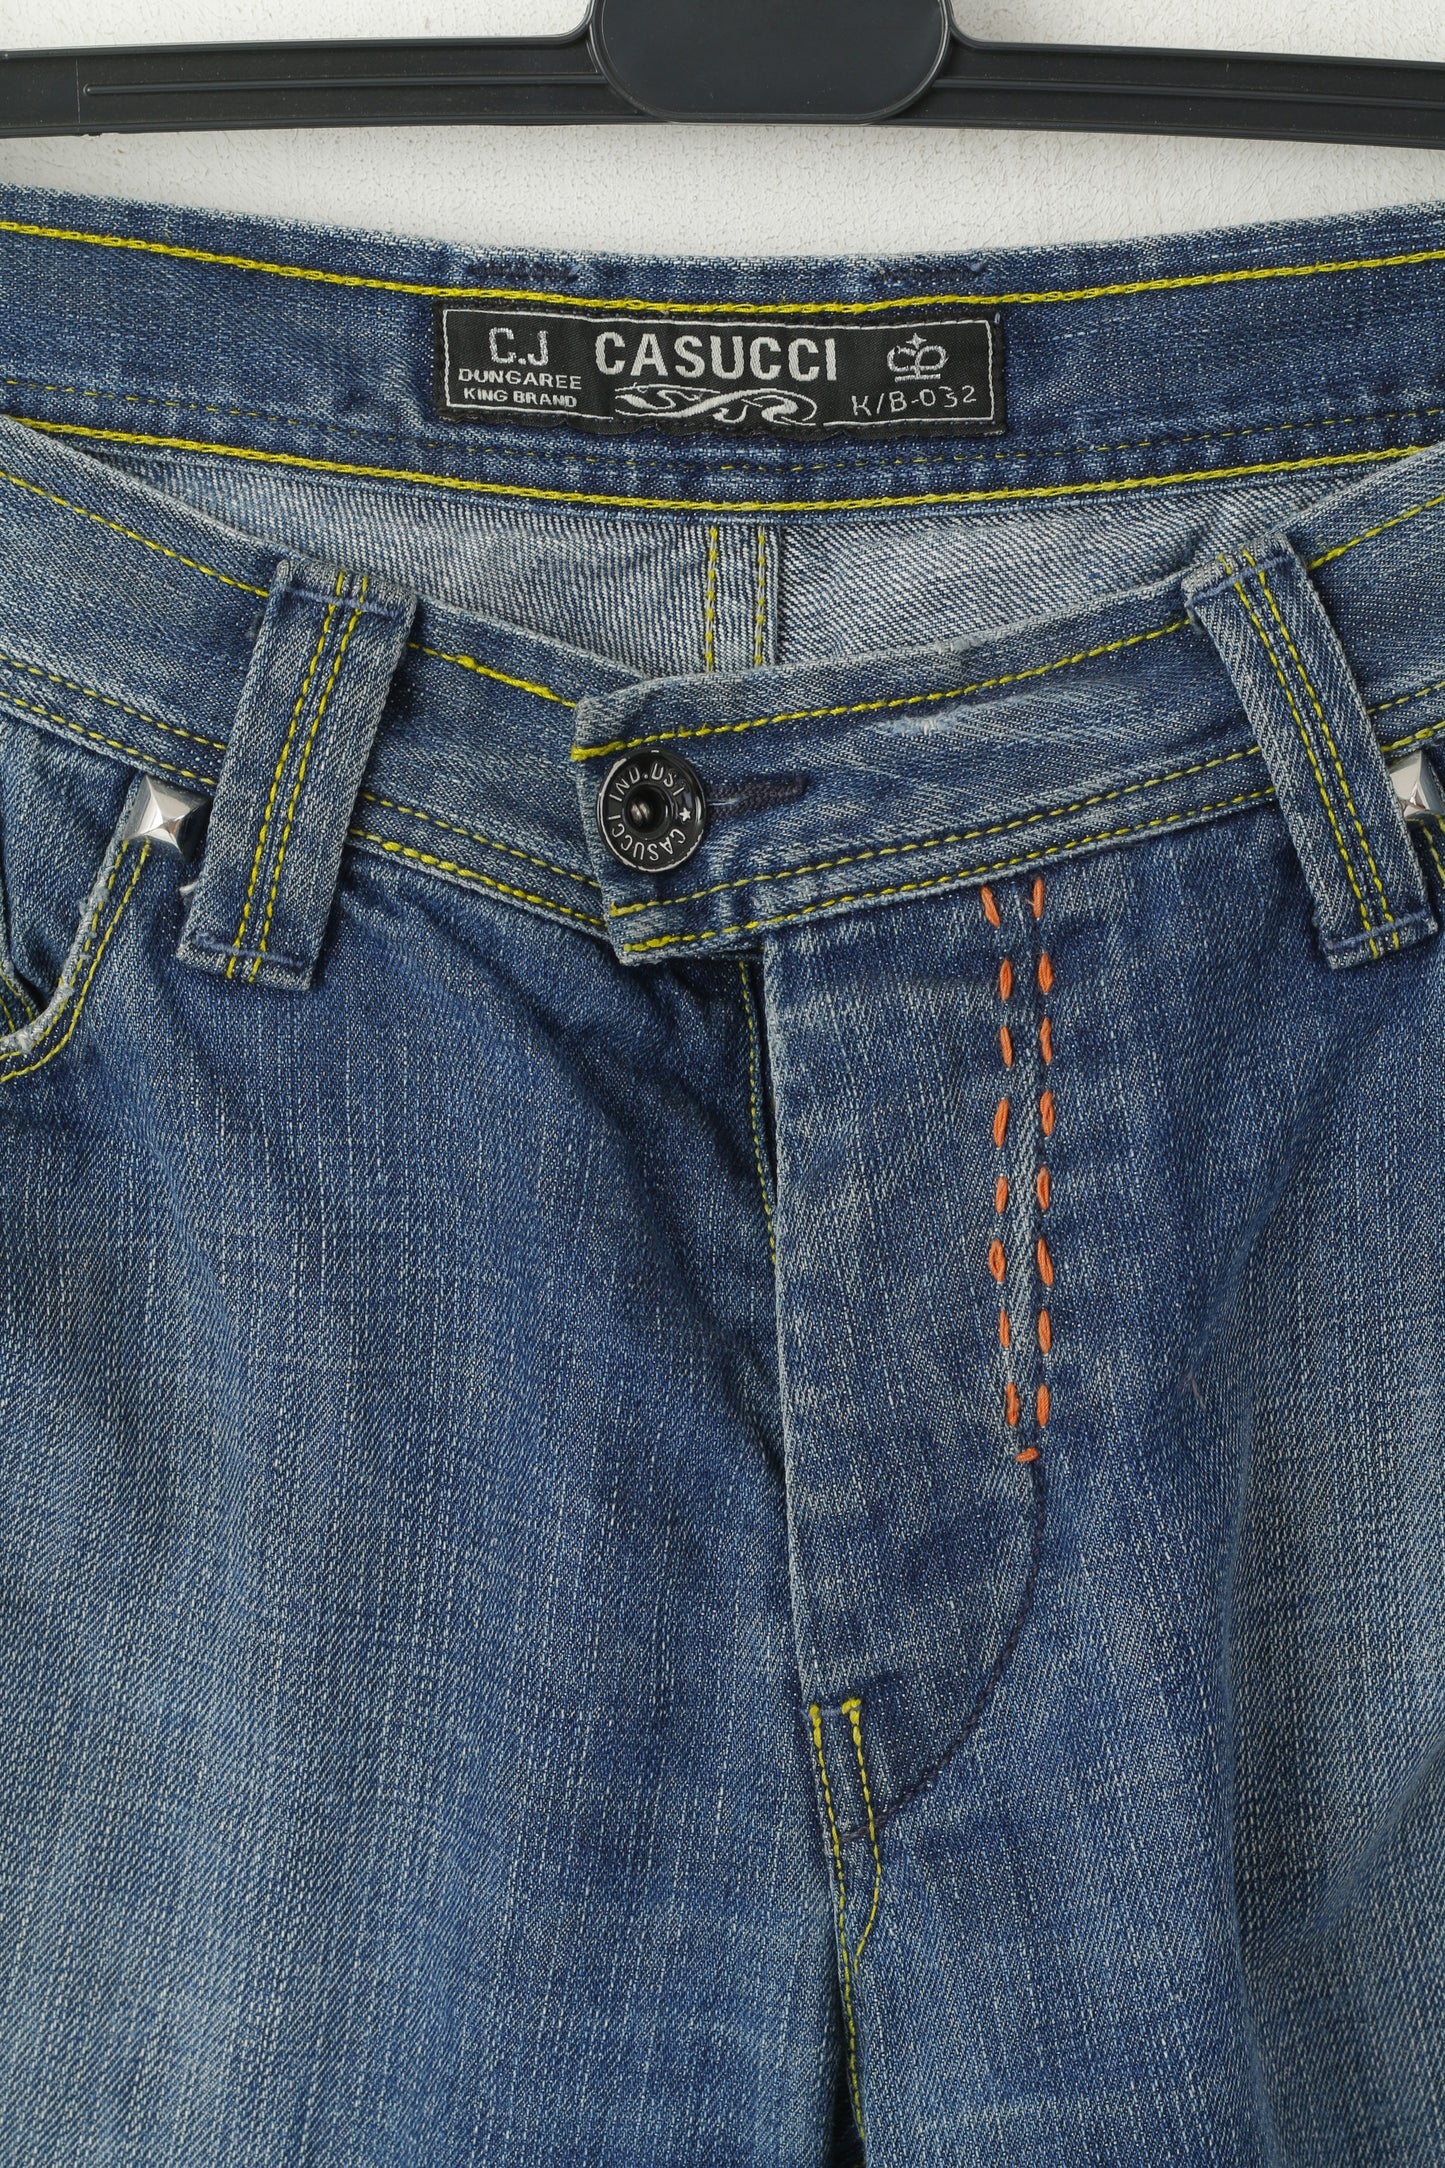 Casucci King Jeans Homme 36 50 Jeans Pantalon Marine Coton Denim Pantalon Droit